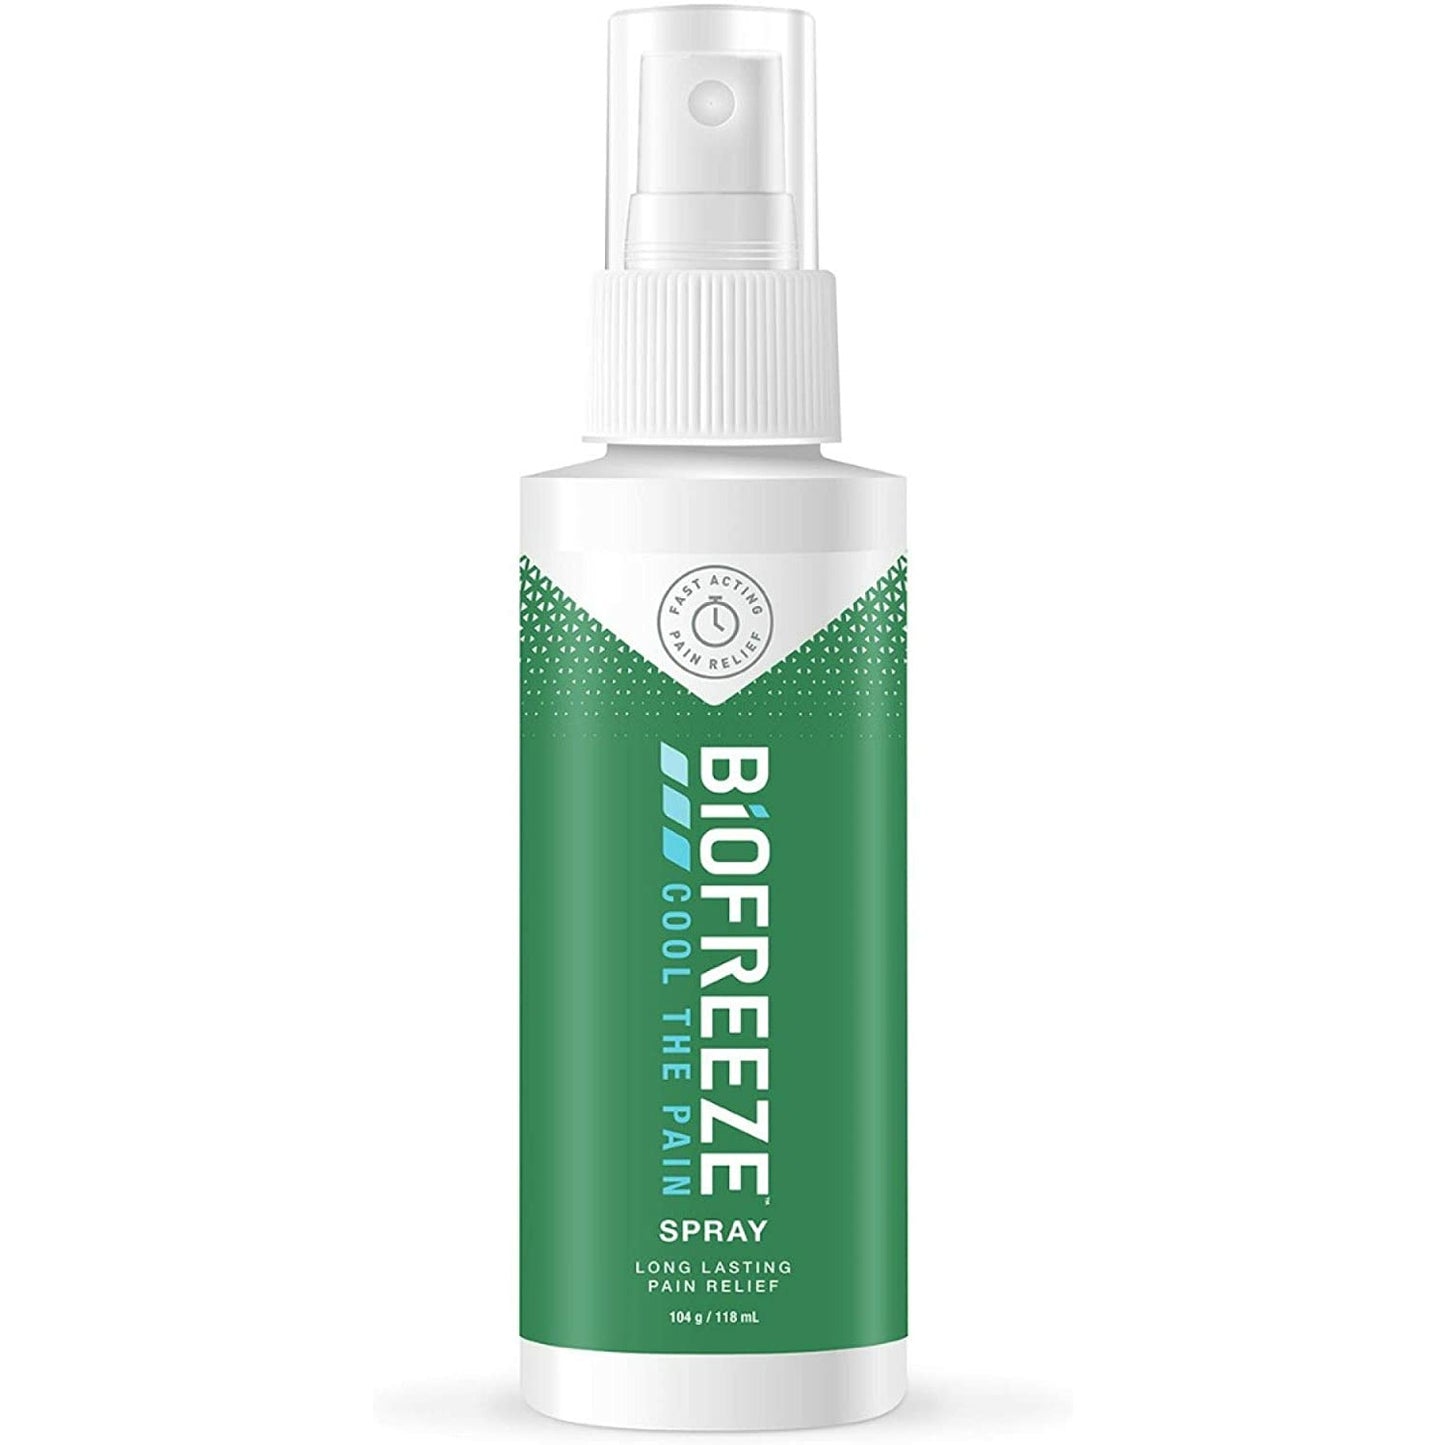 Biofreeze Pain relief Spray 104g